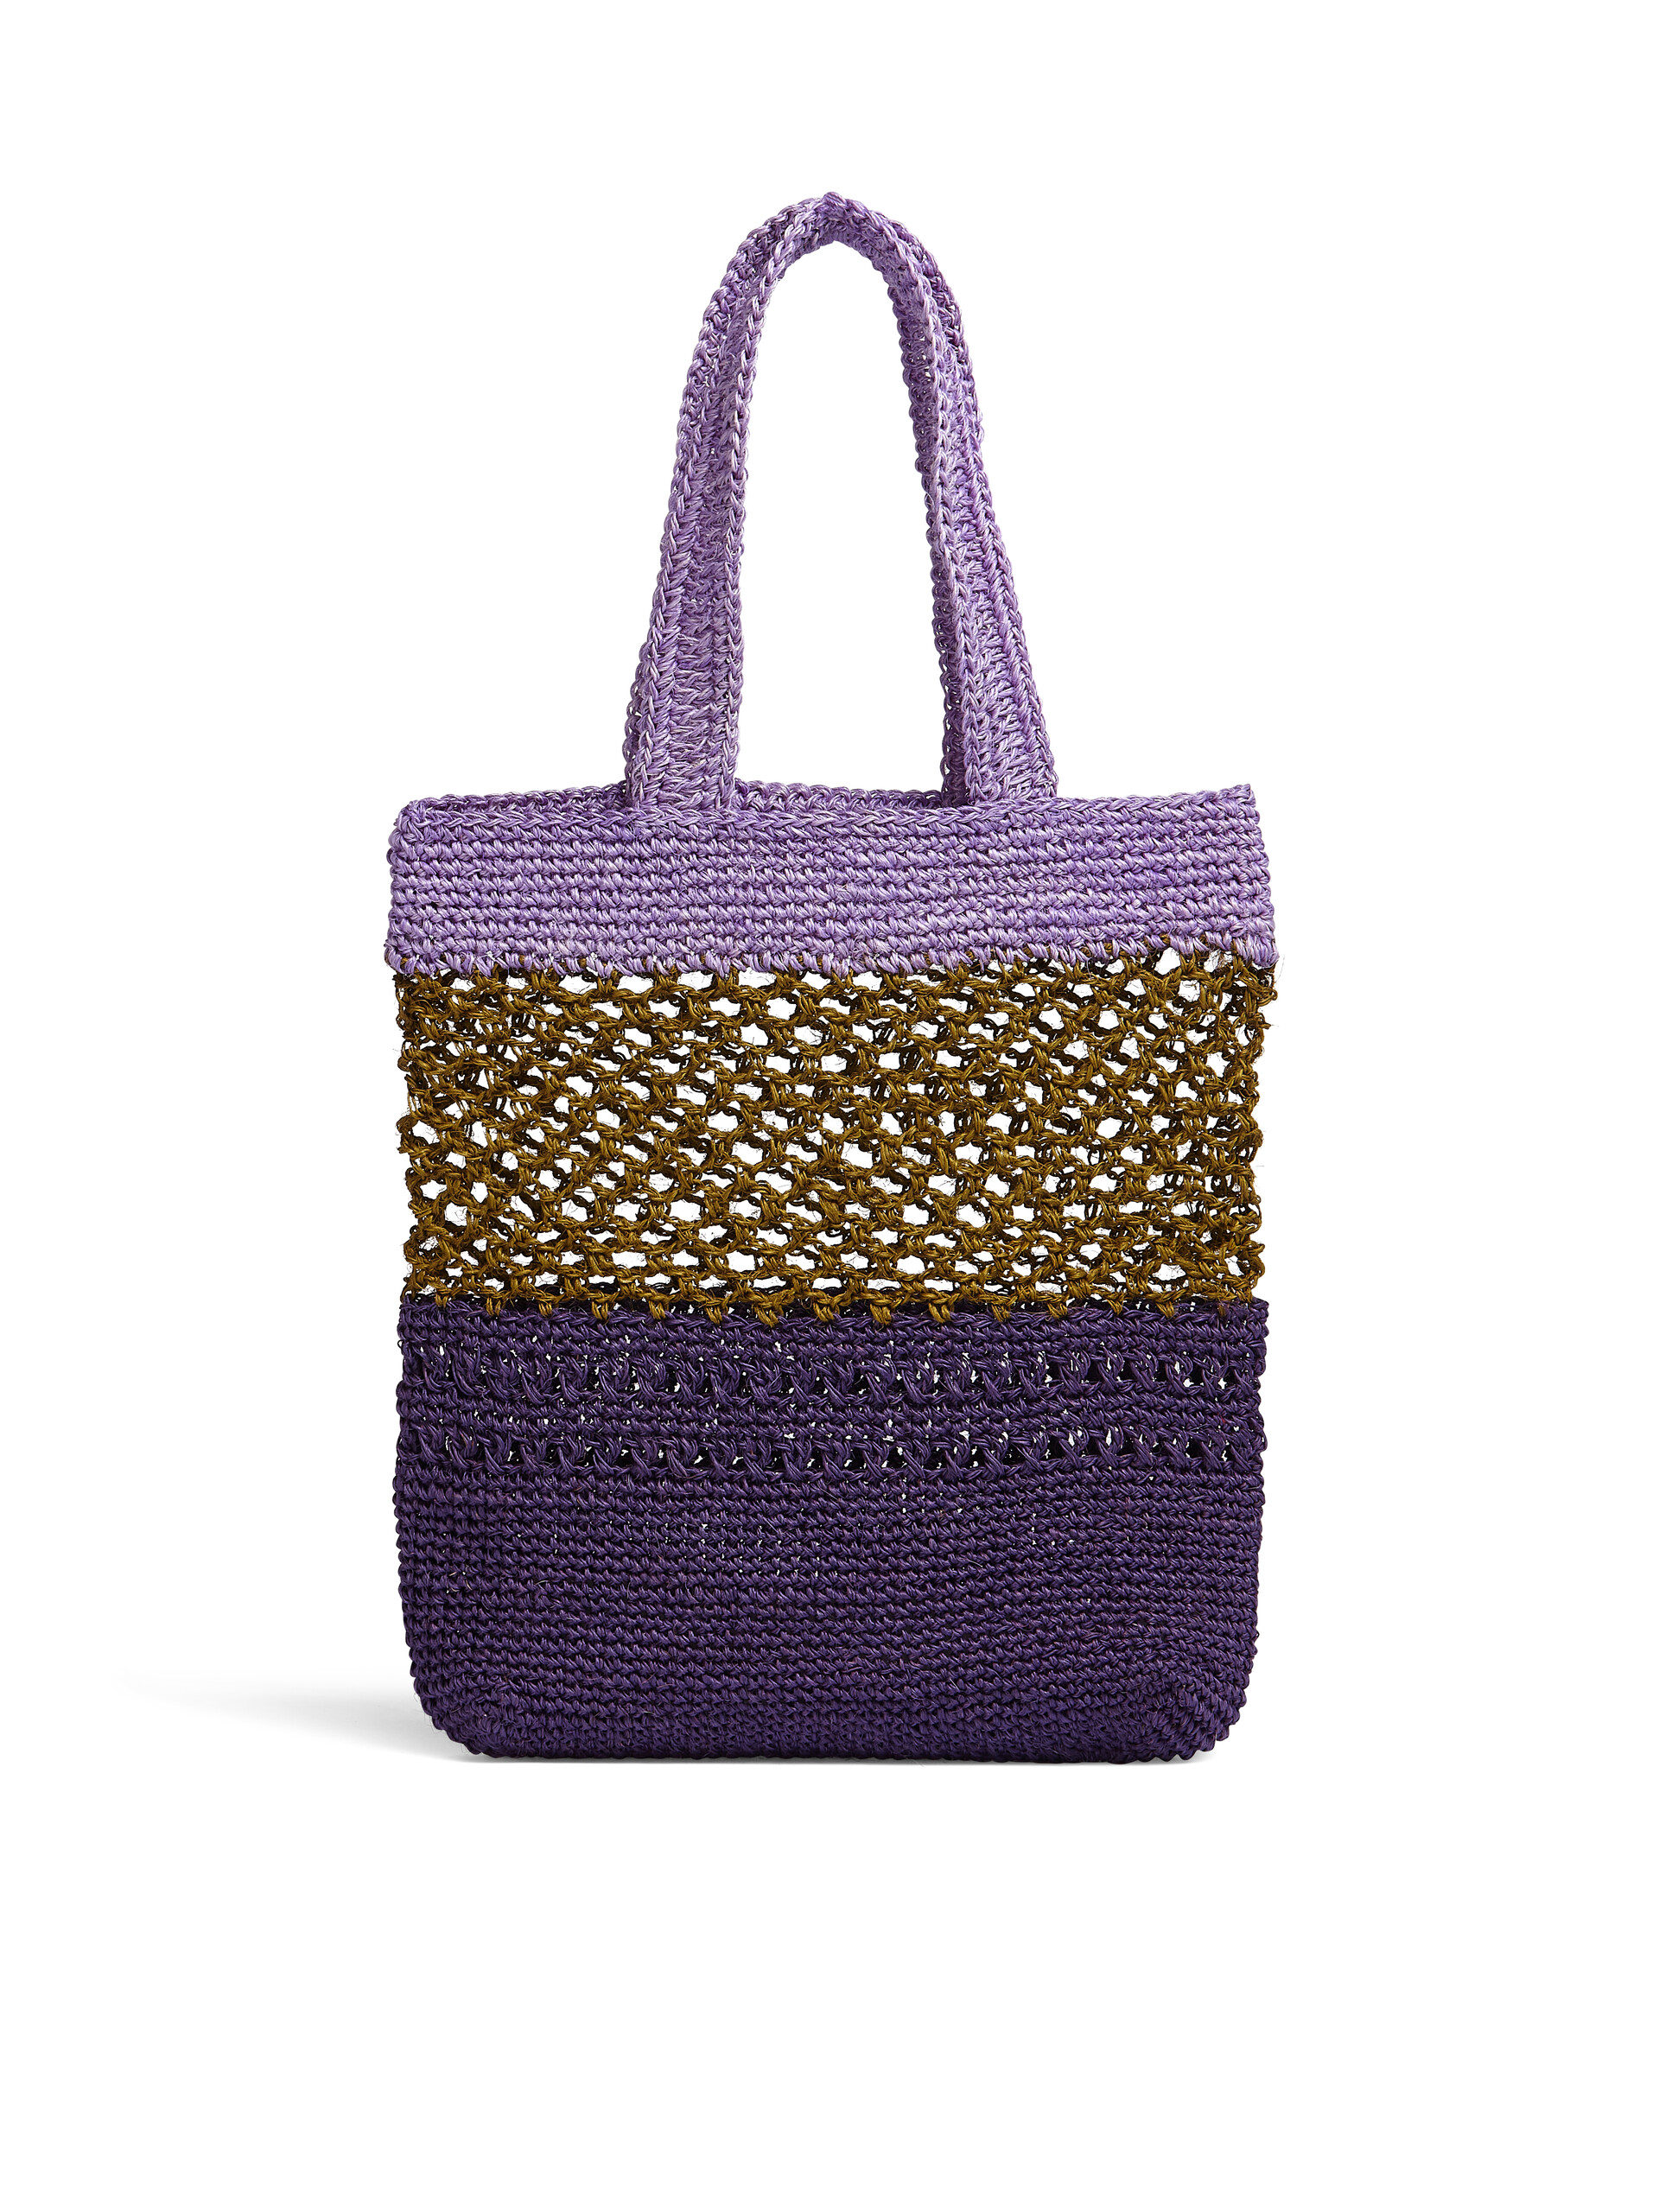 Details about   Large Crochet Market Bag Beach Bag Tote Bag Purse New Handmade Multi Color 